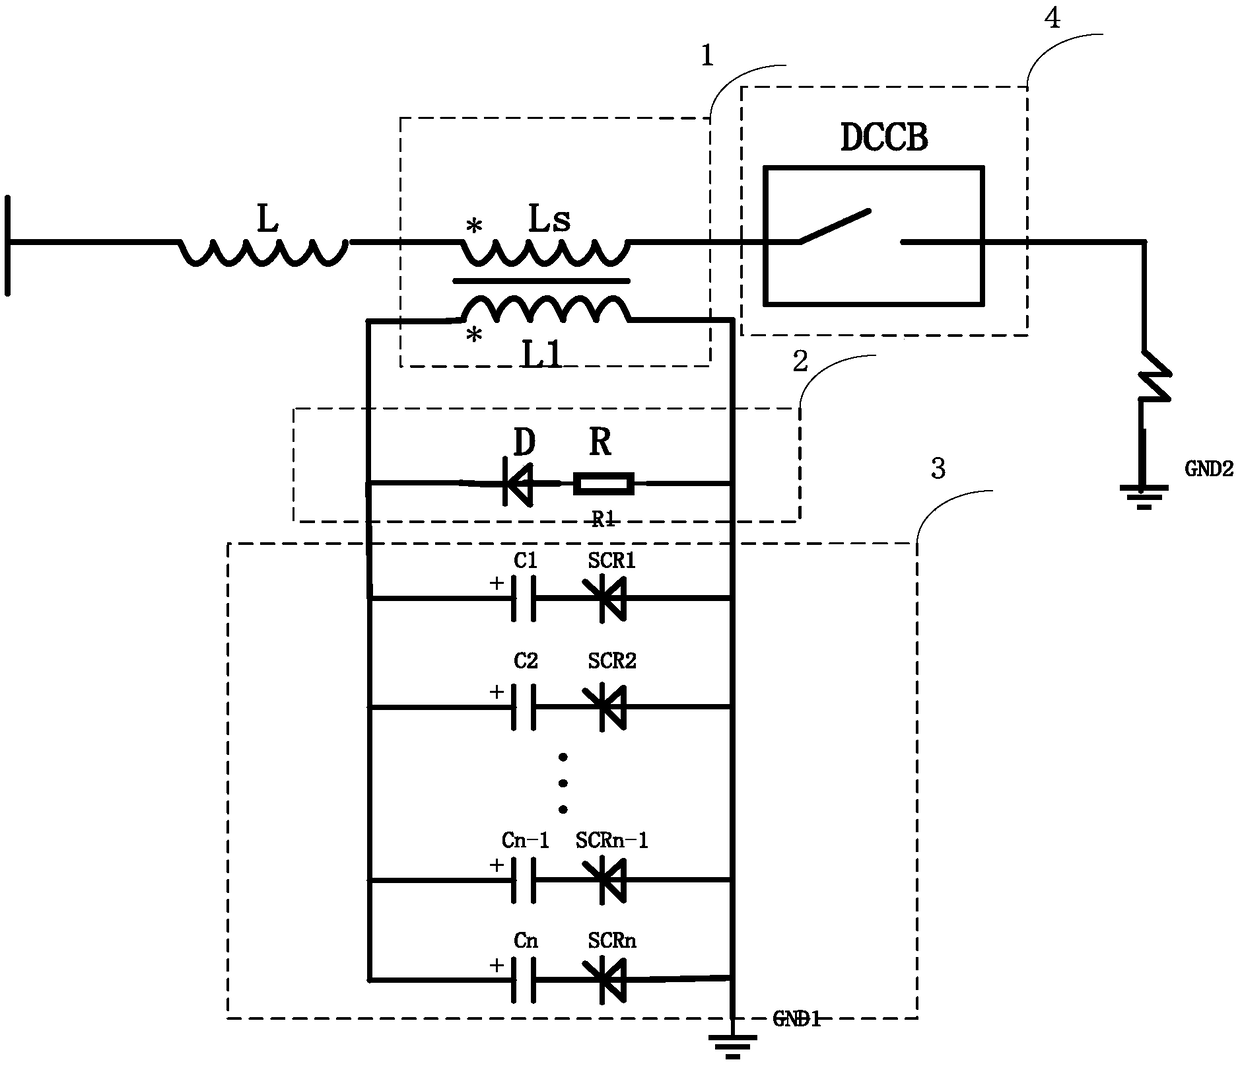 Coupling reactor high-voltage direct current fault current limiter